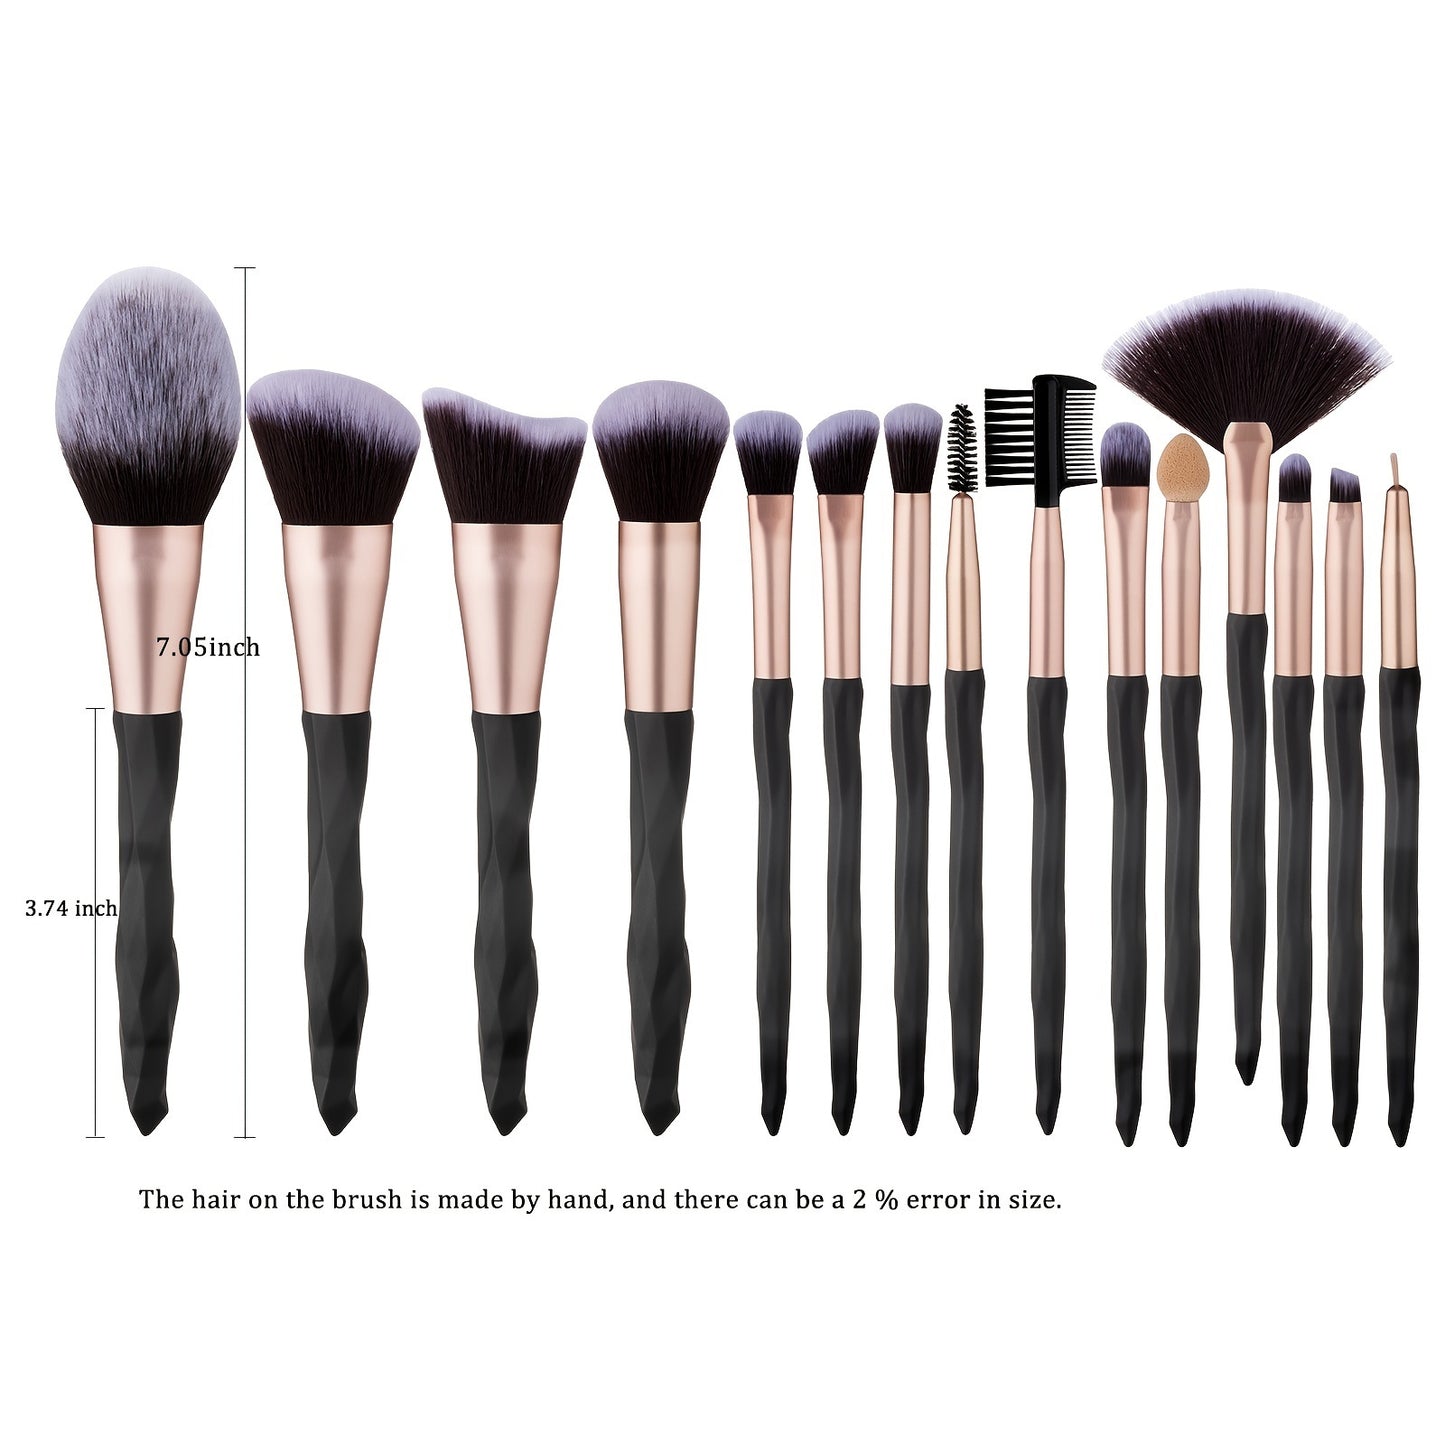 KOSMETYKI 18Pcs Makeup Brushes Set With Makeup Sponge; Soft Synthetic Hair Face Make Up Brush Tools For Foundation; Powder; Eyeshadow; Eyebrow; Eyeliner; Blending